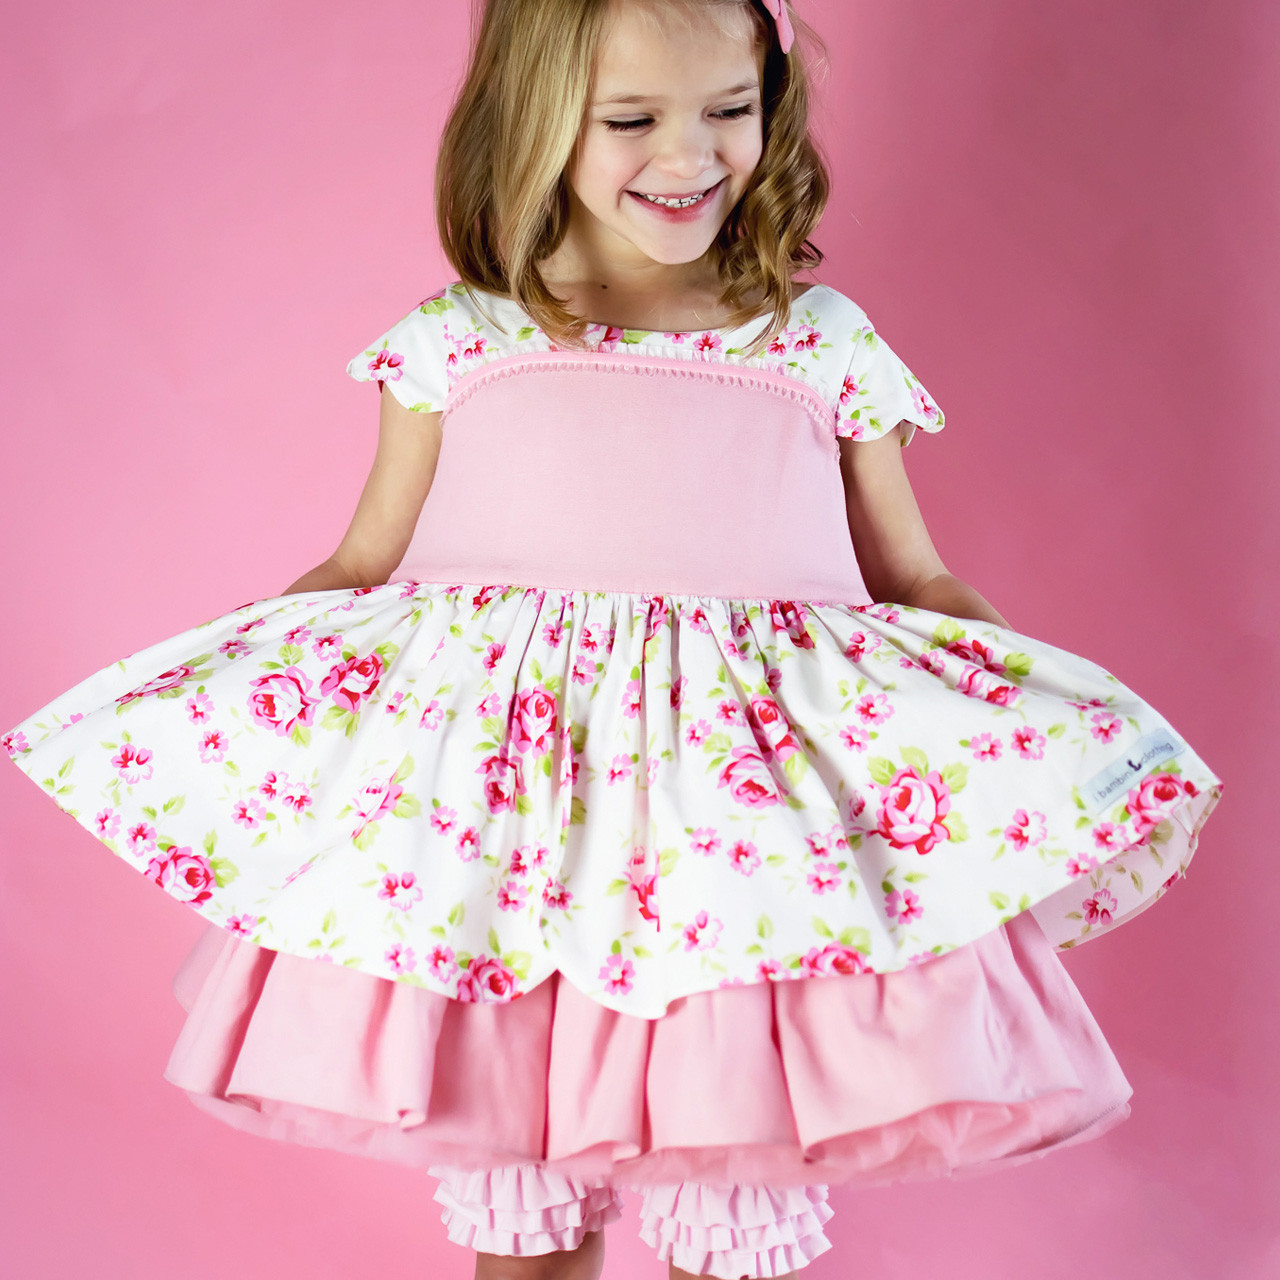 Heirloom Easter Set: Dress + Ruffled Bo Peep Shorts in Pink Roses